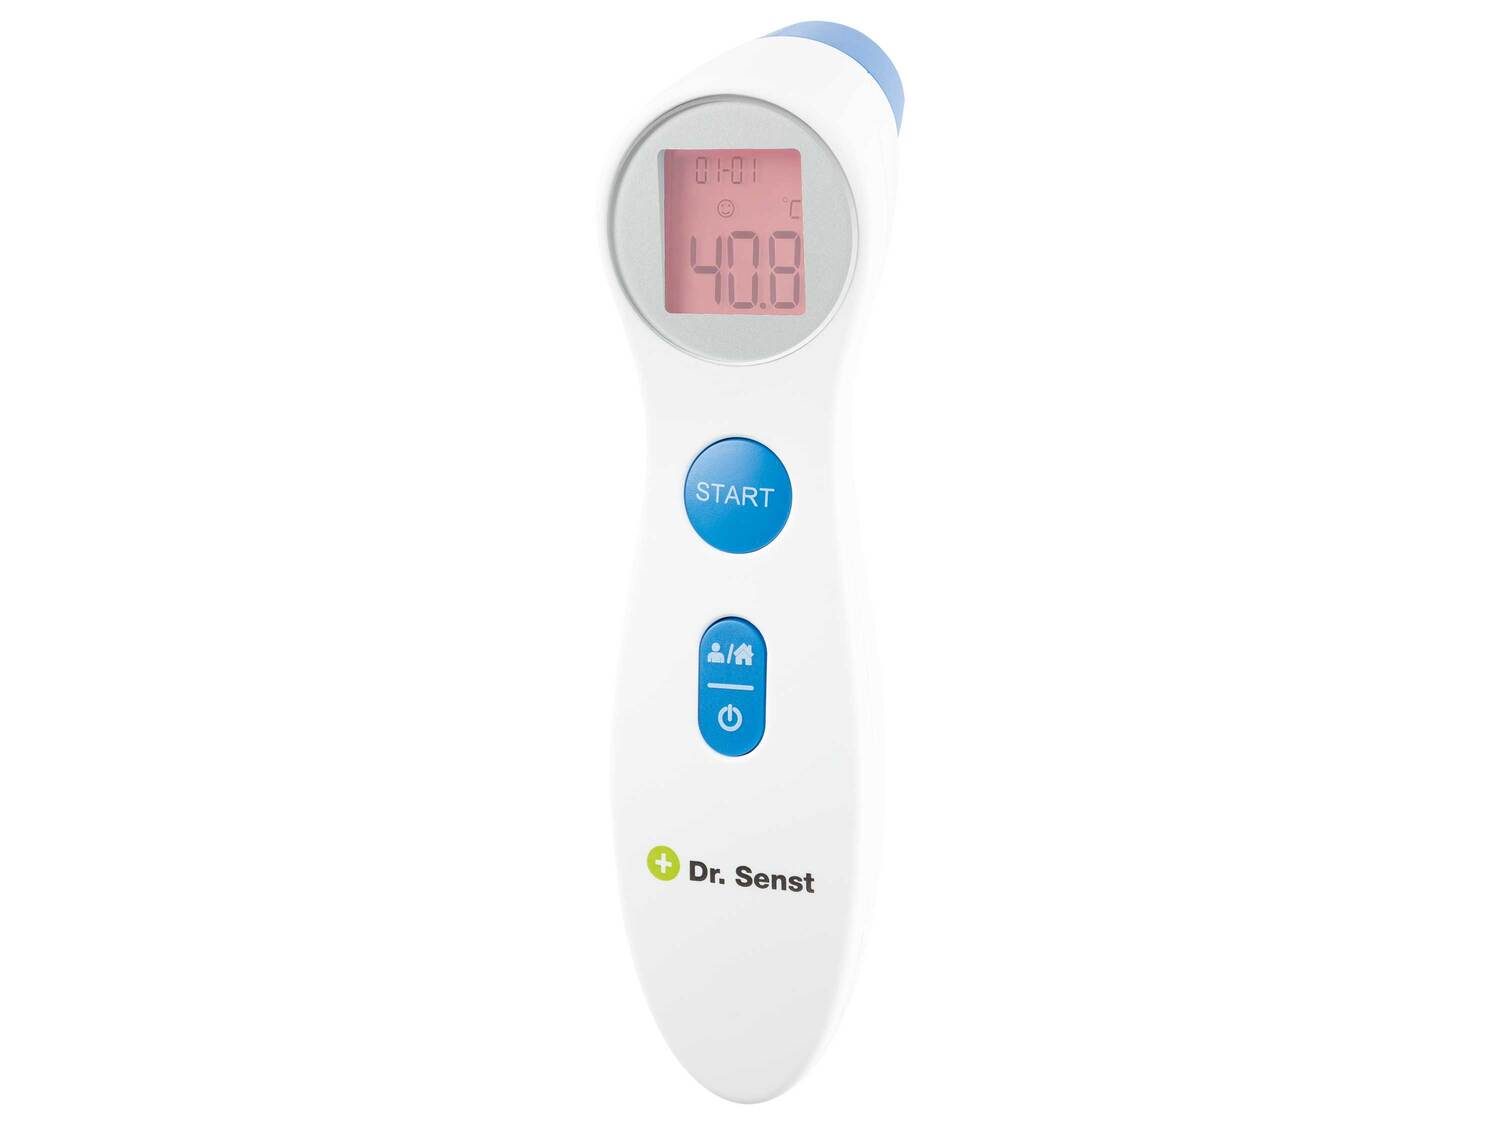 Thermomètre frontal infrarouge , le prix 17.99 &#8364; 
- Sans contact
- Mesure ...